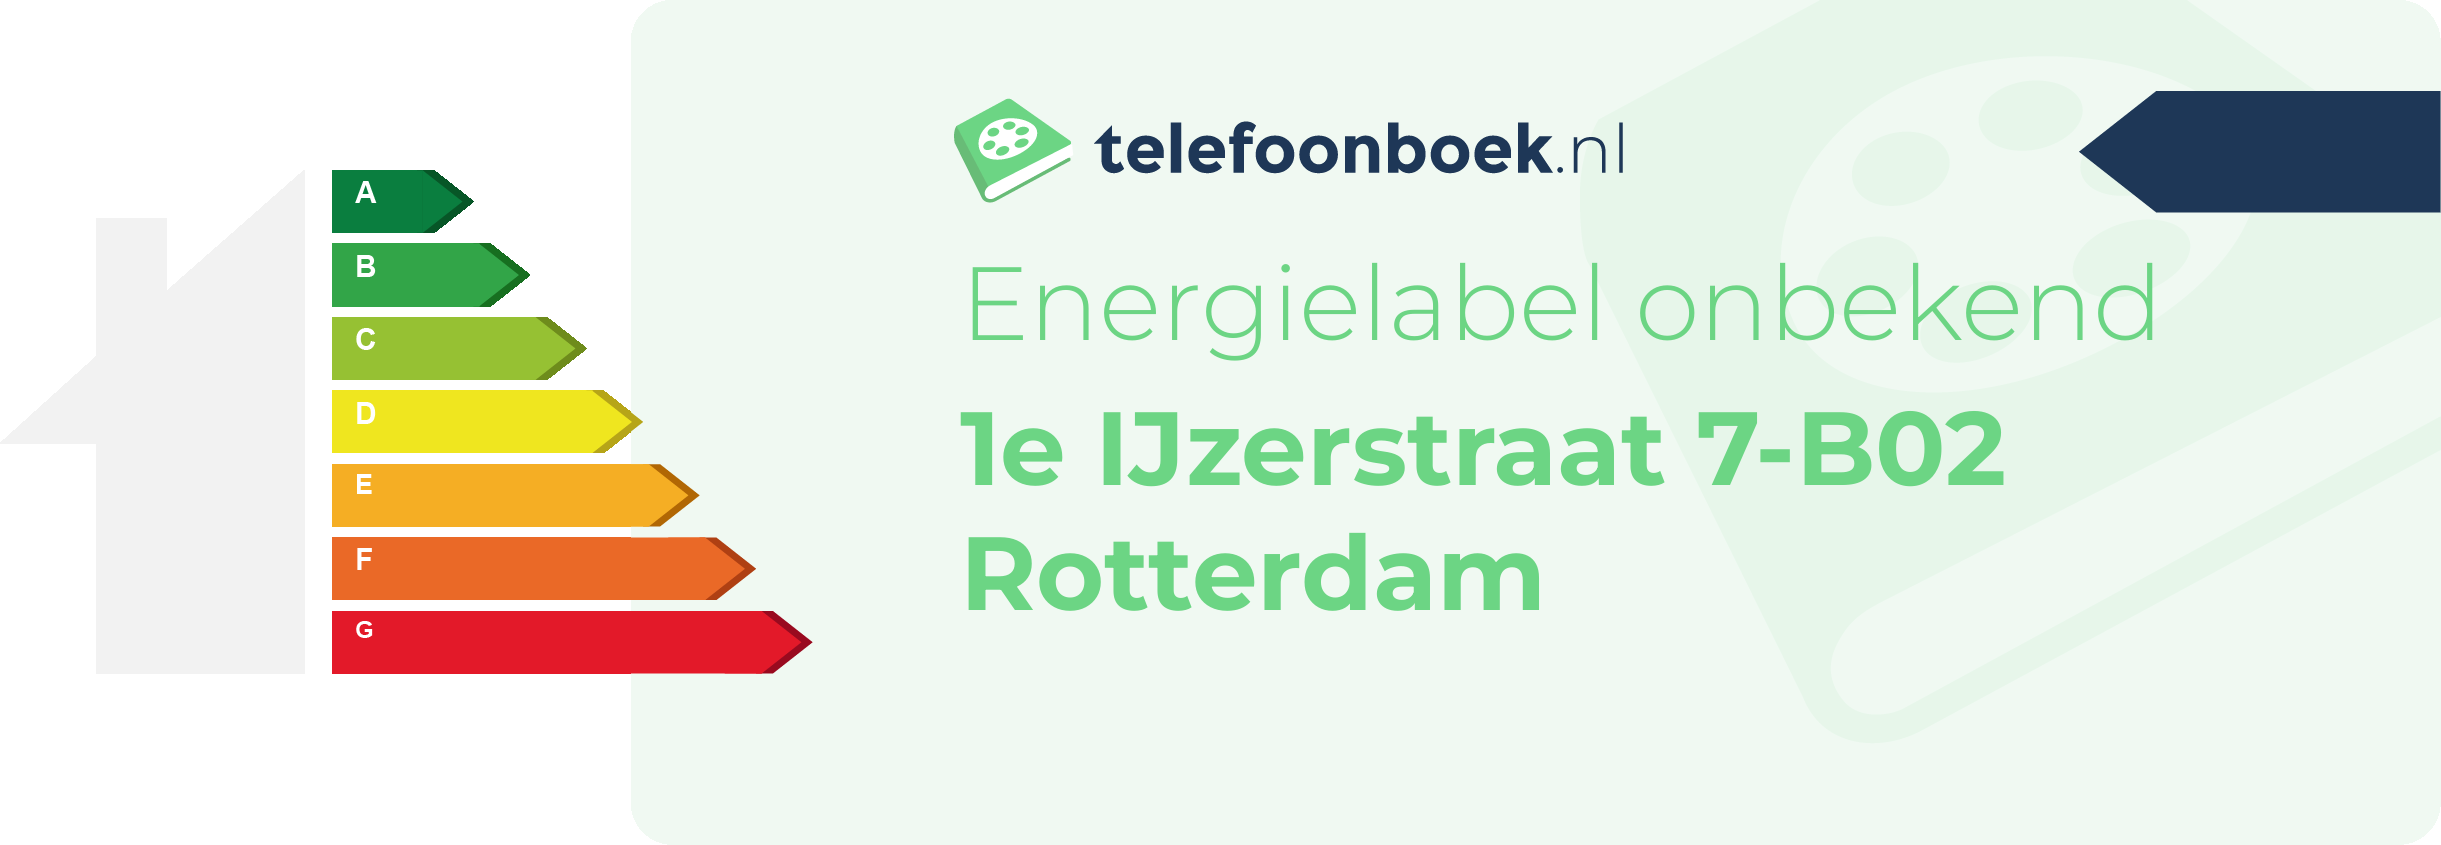 Energielabel 1e IJzerstraat 7-B02 Rotterdam